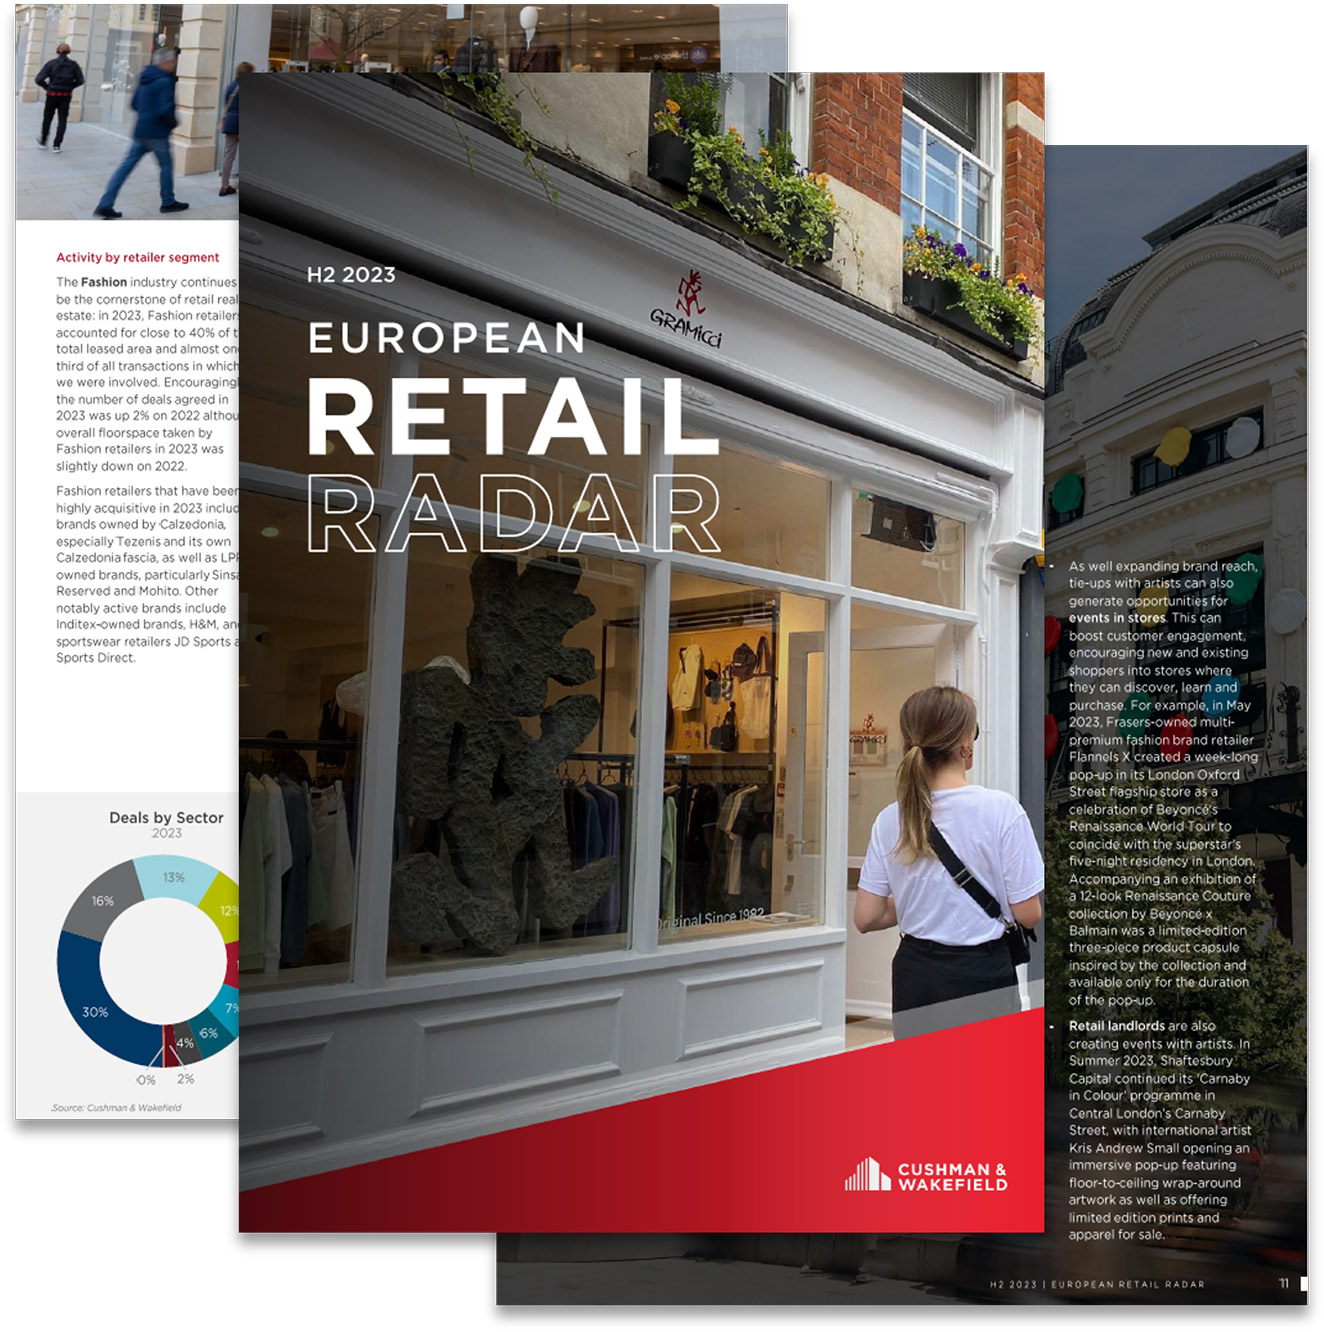 European Retail Radar Report H2 2023